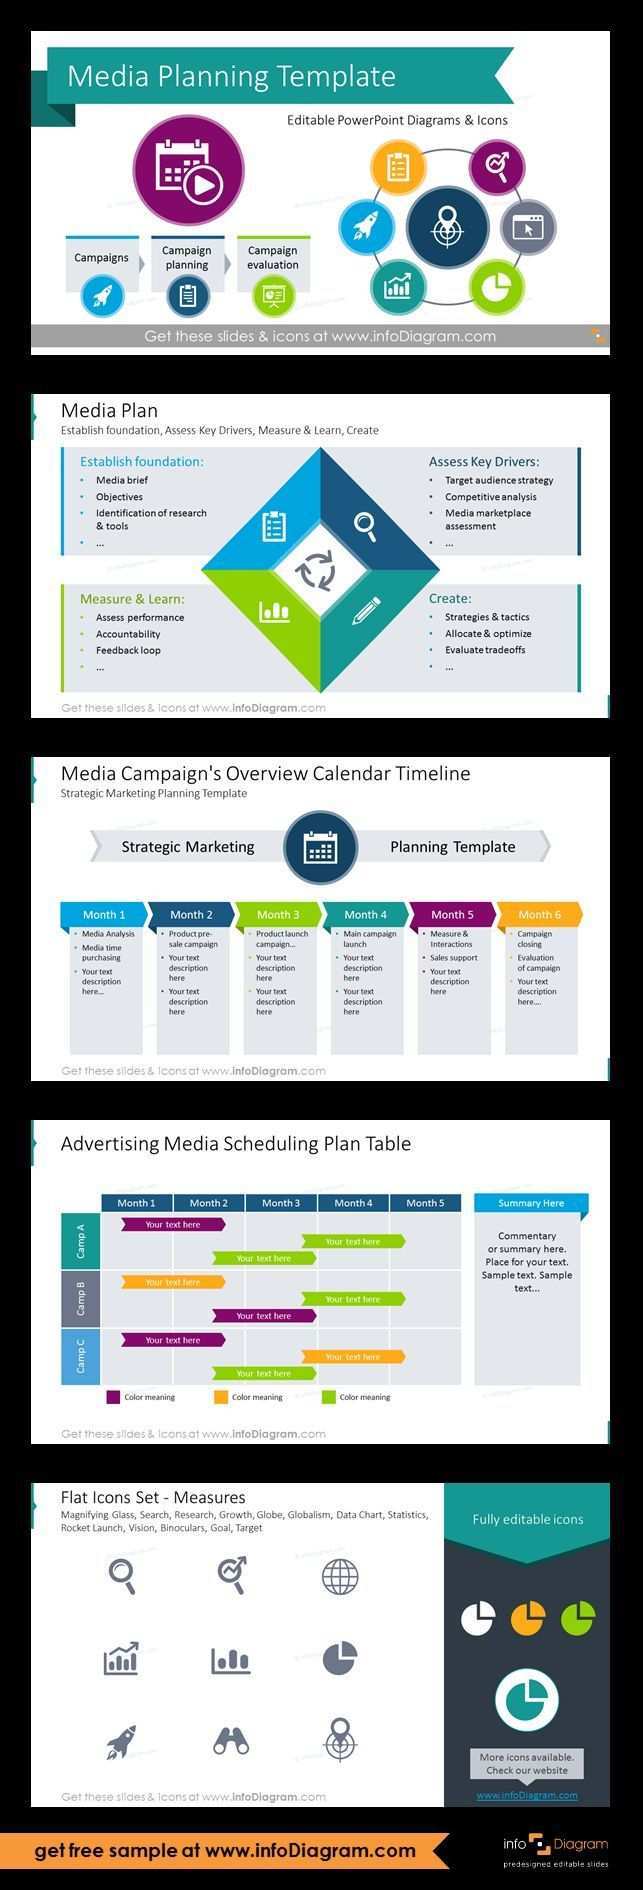 Marketing Strategies Icon Internet Marketing In 2020 Digital Marketing Strategy Template Marketing Strategy Template Media Planning